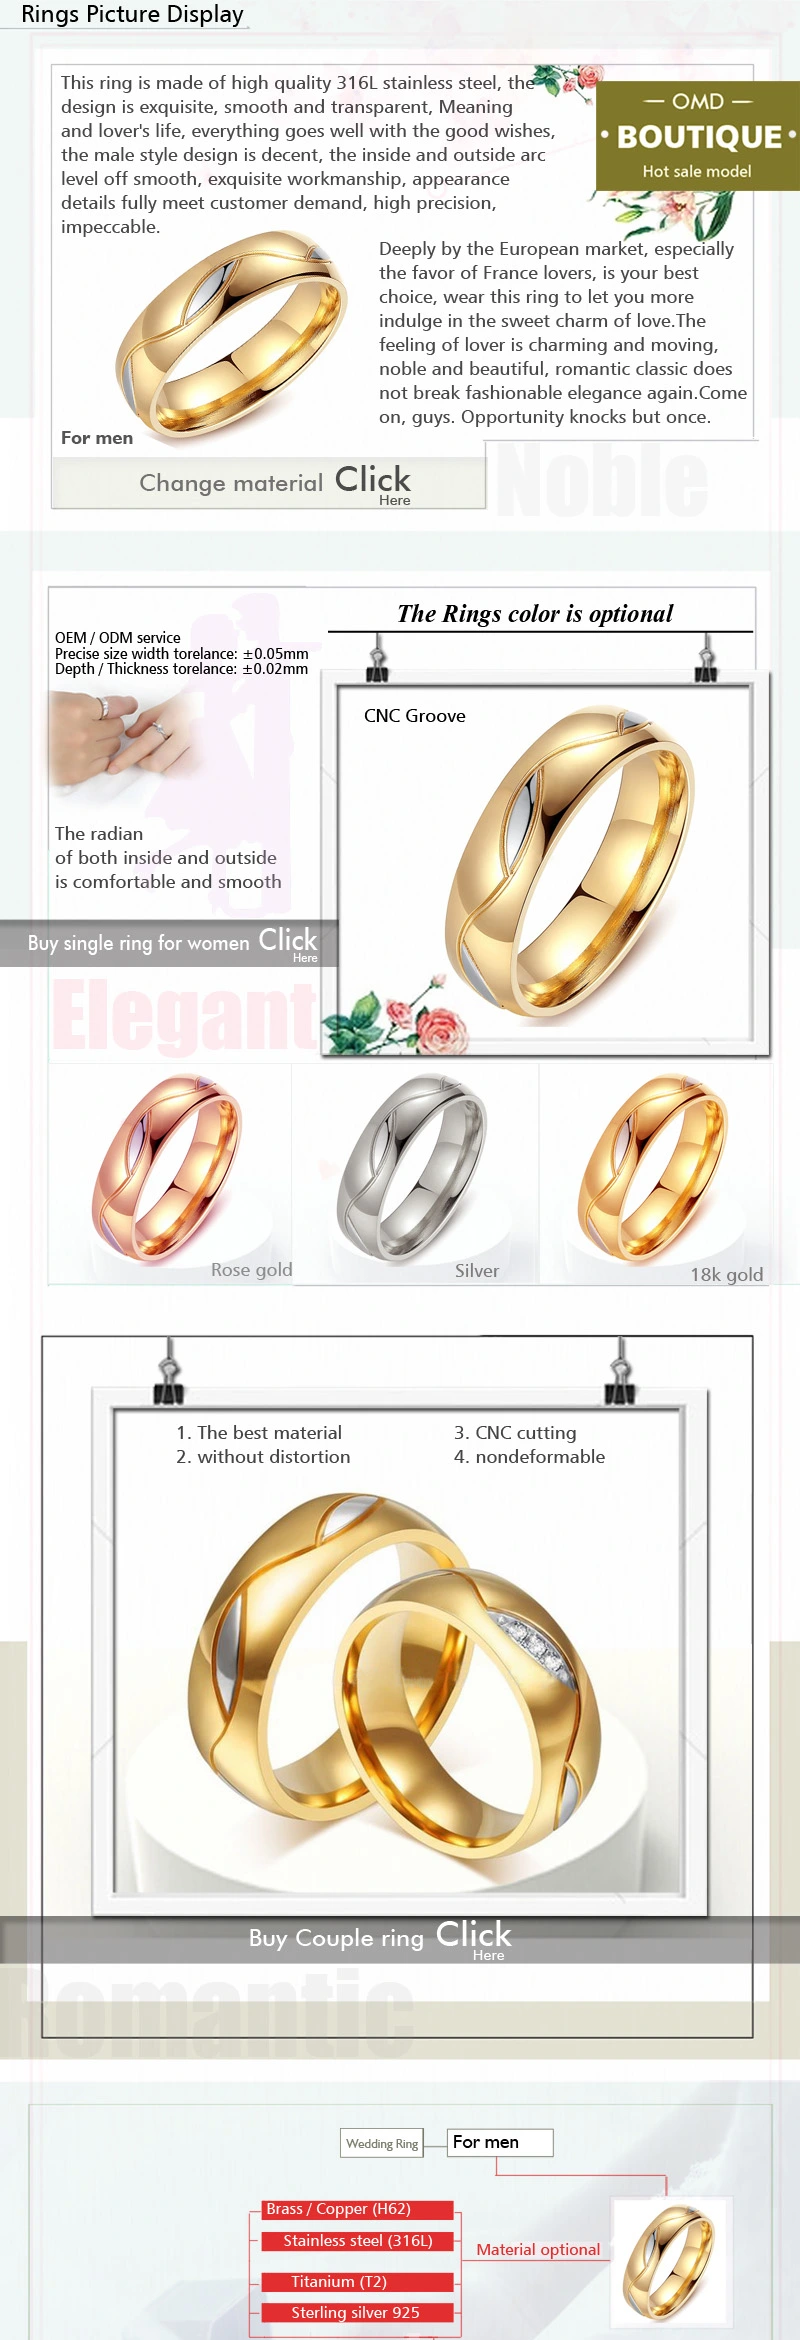 Men's Wedding & Engagement Silver Band Rings Two Tone Rings 14K/18K